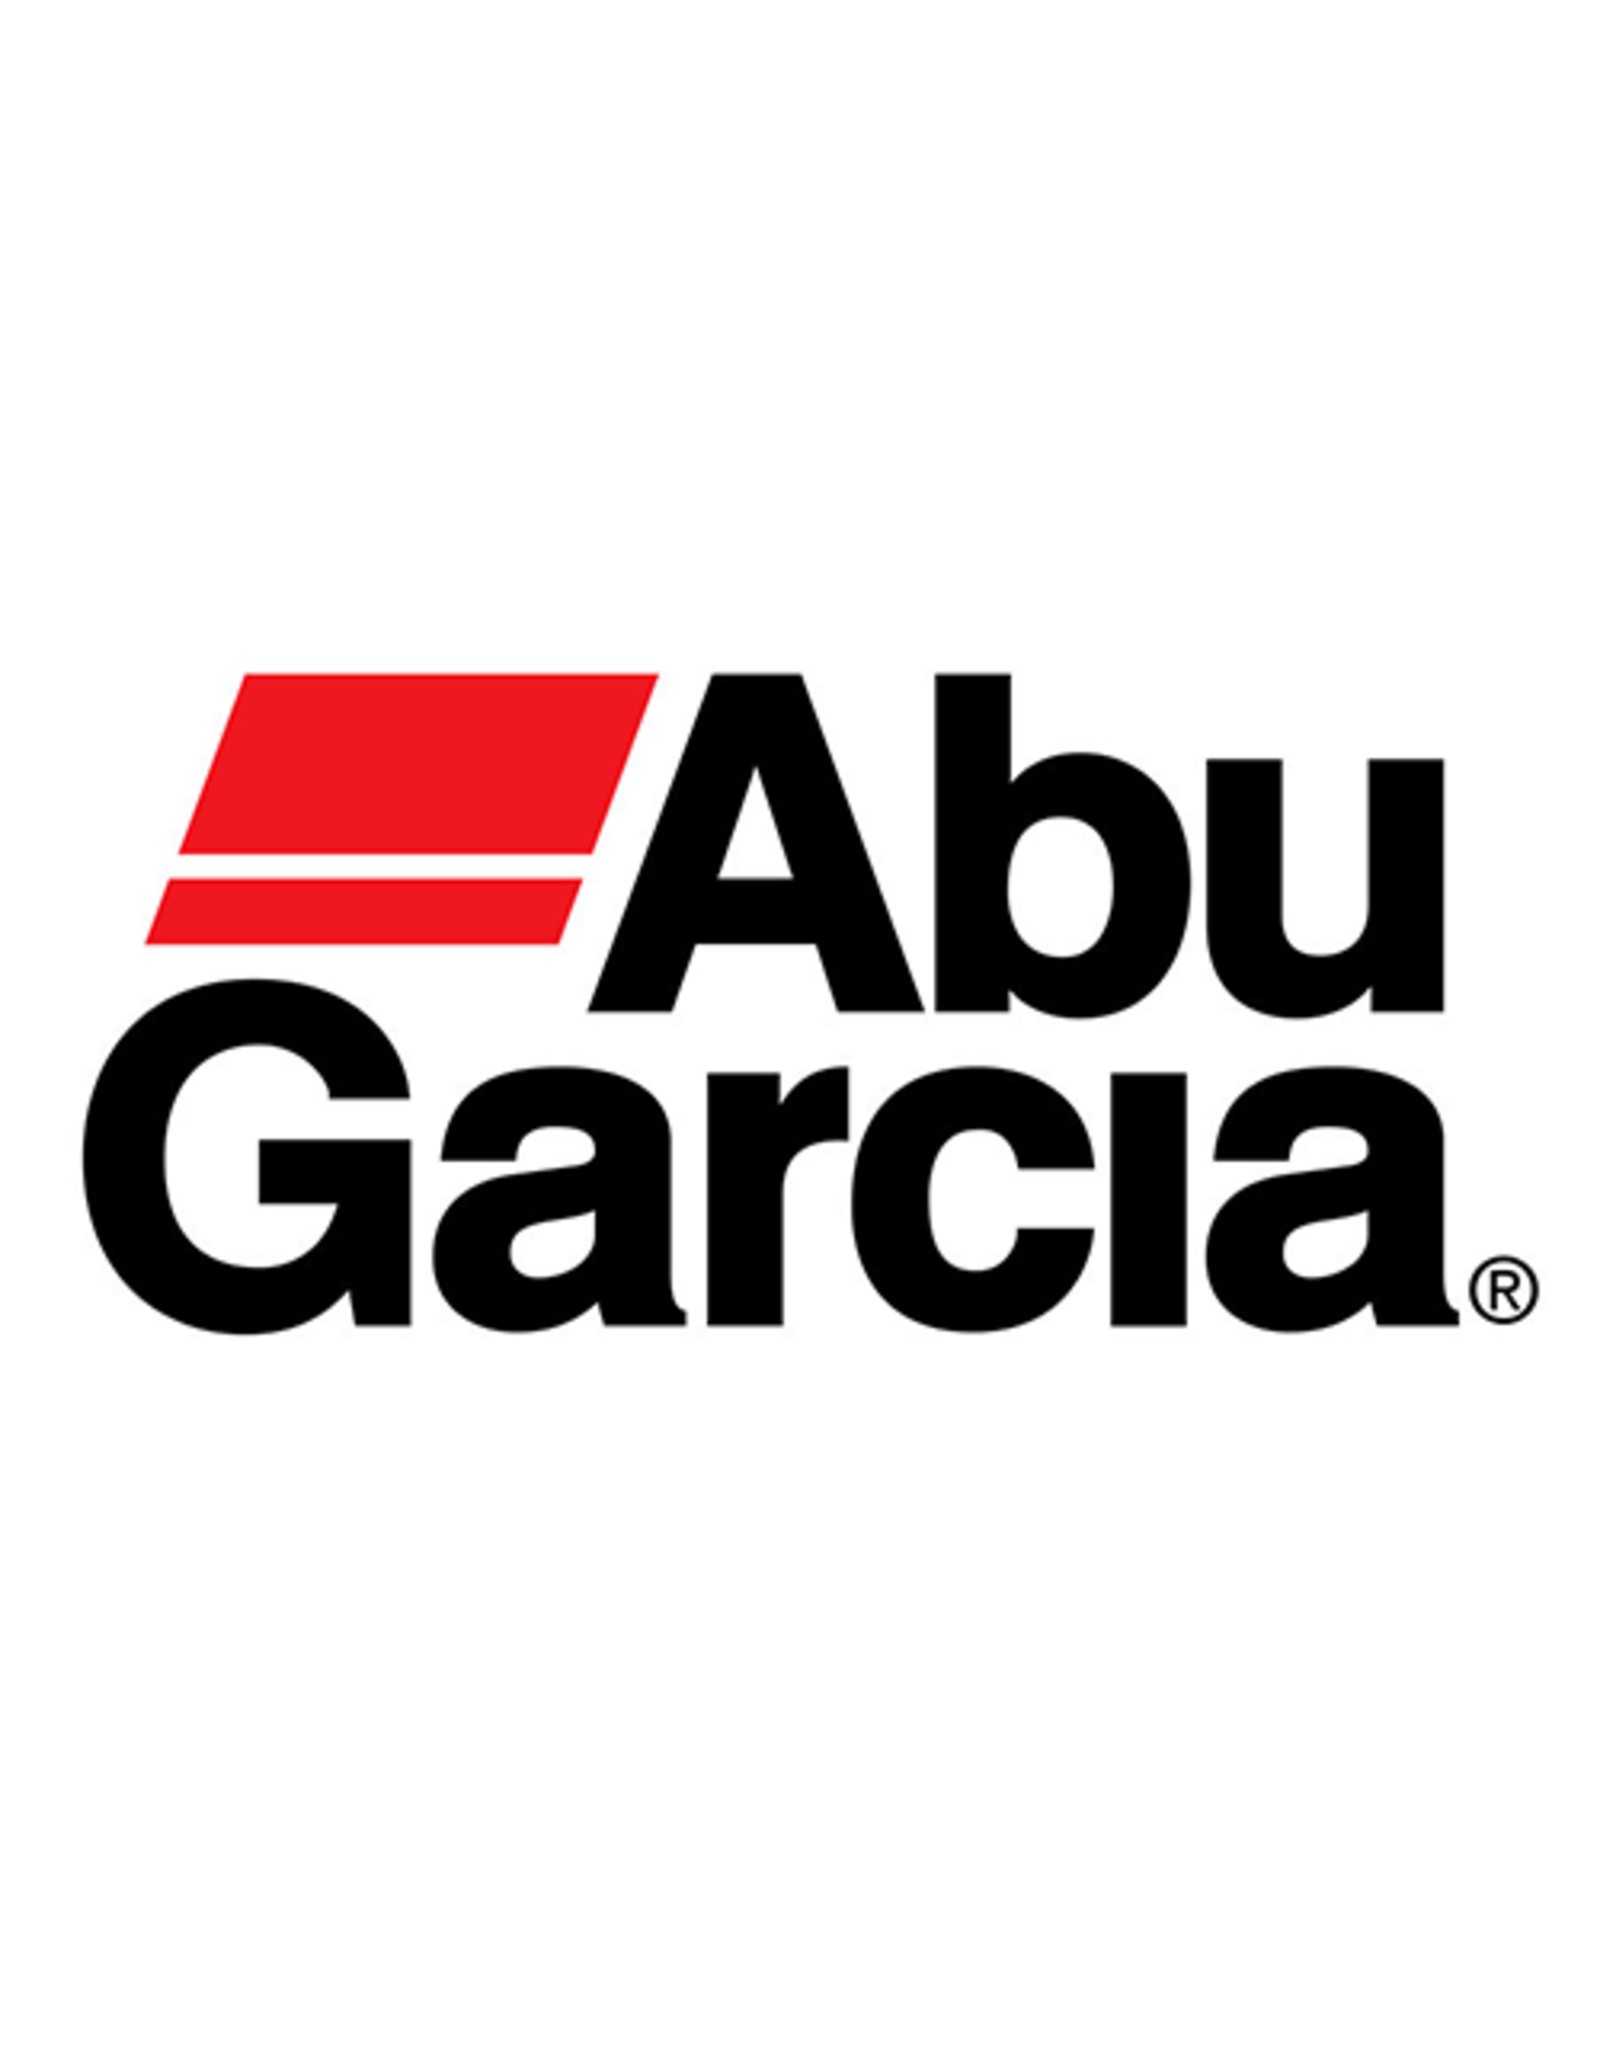 Abu Garcia 19843  BUSHING